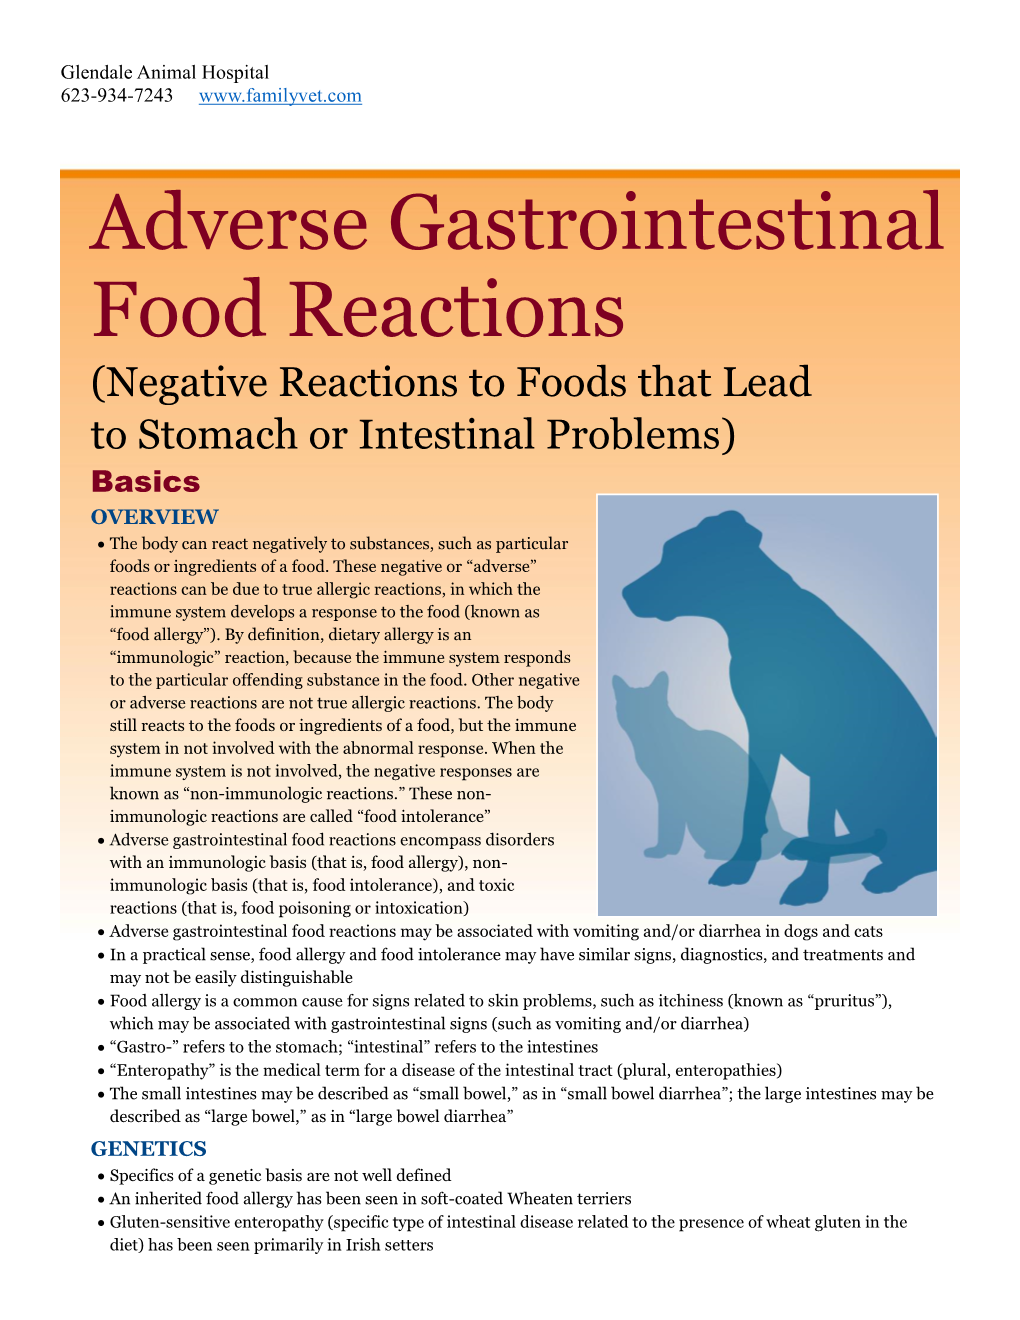 Adverse Gastrointestinal Food Reactions